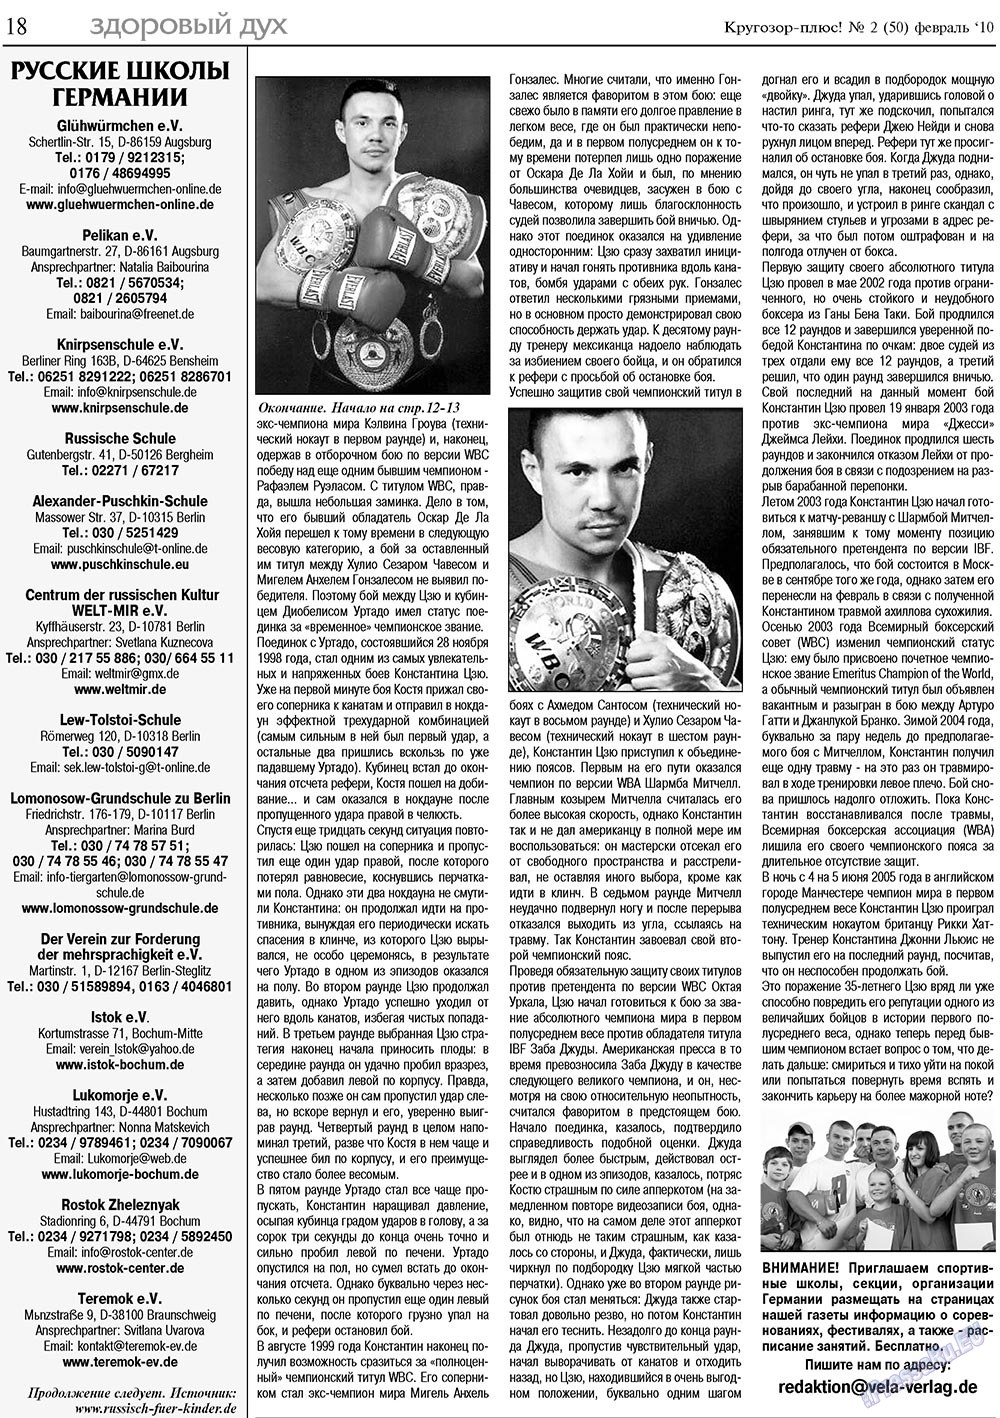 Кругозор плюс! (газета). 2010 год, номер 2, стр. 18